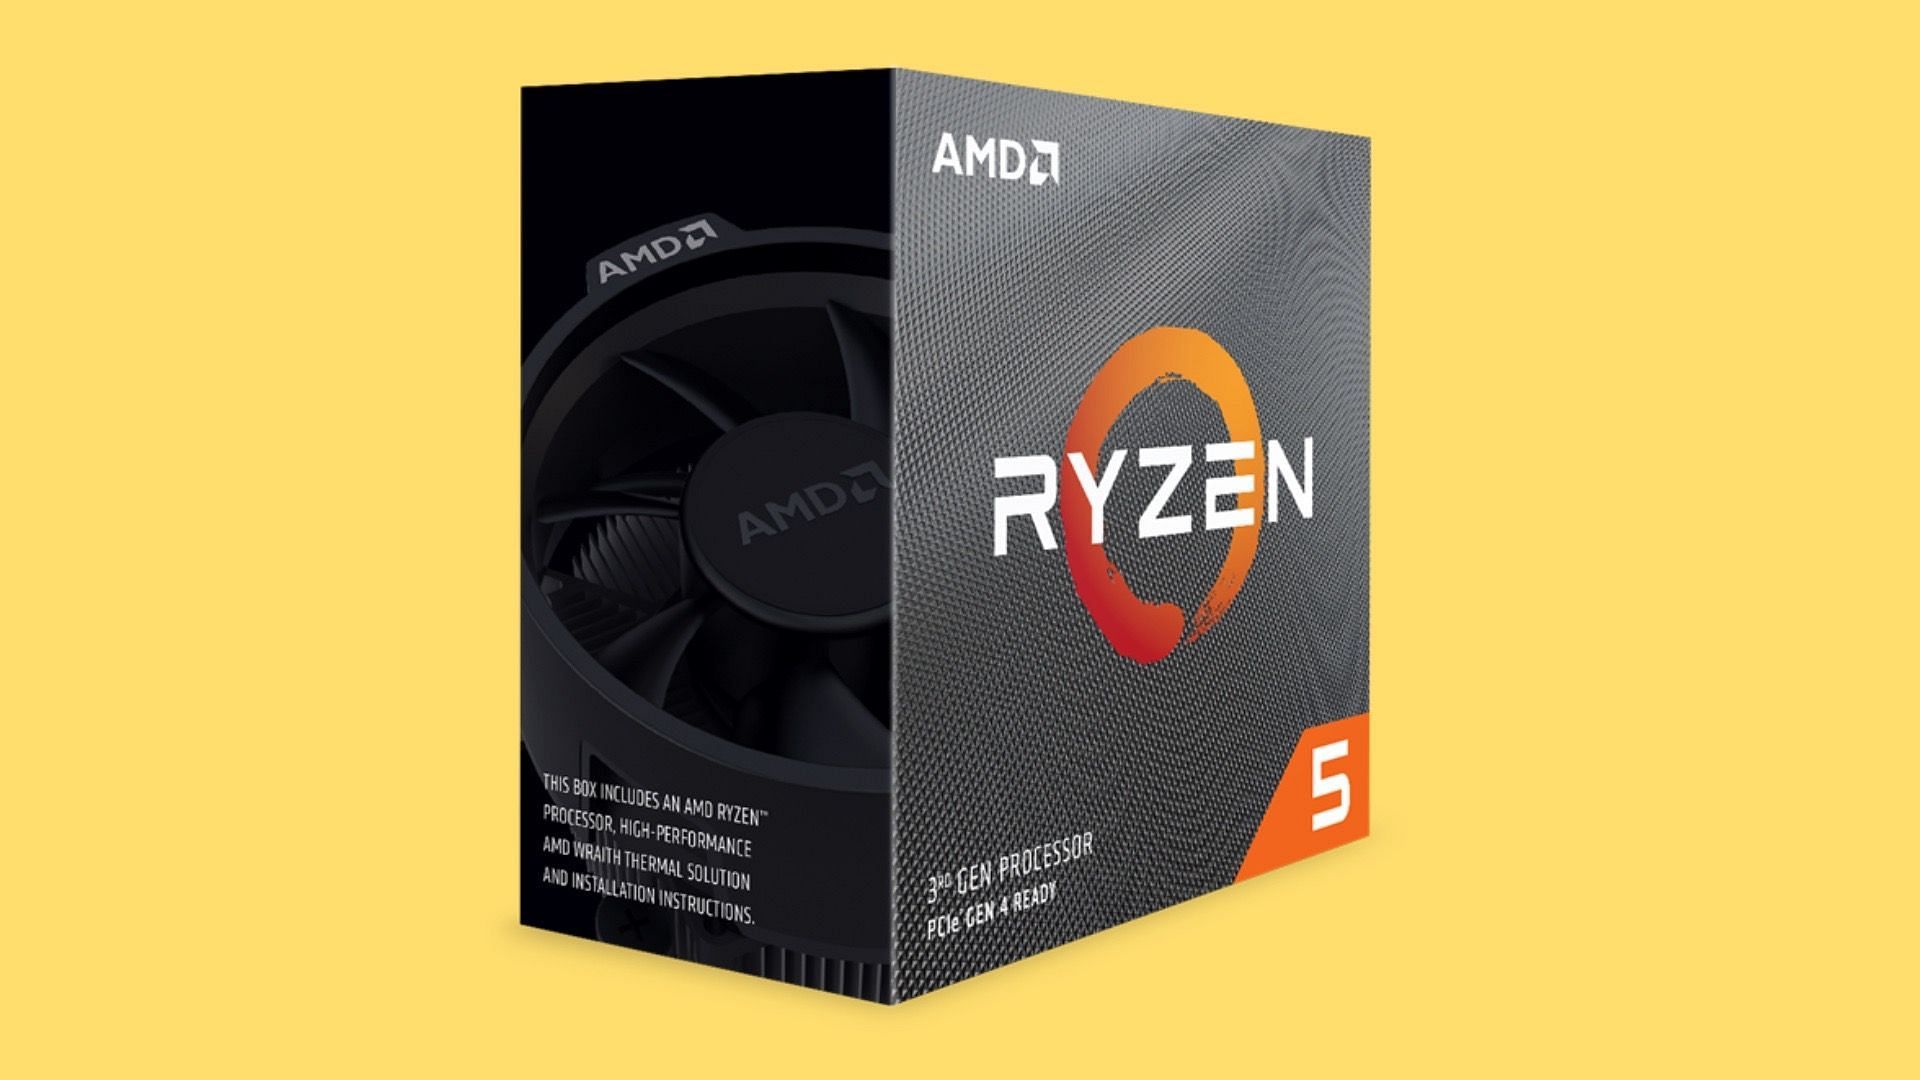 Ryzen 5 3600 takes steps forward (Image via AMD)